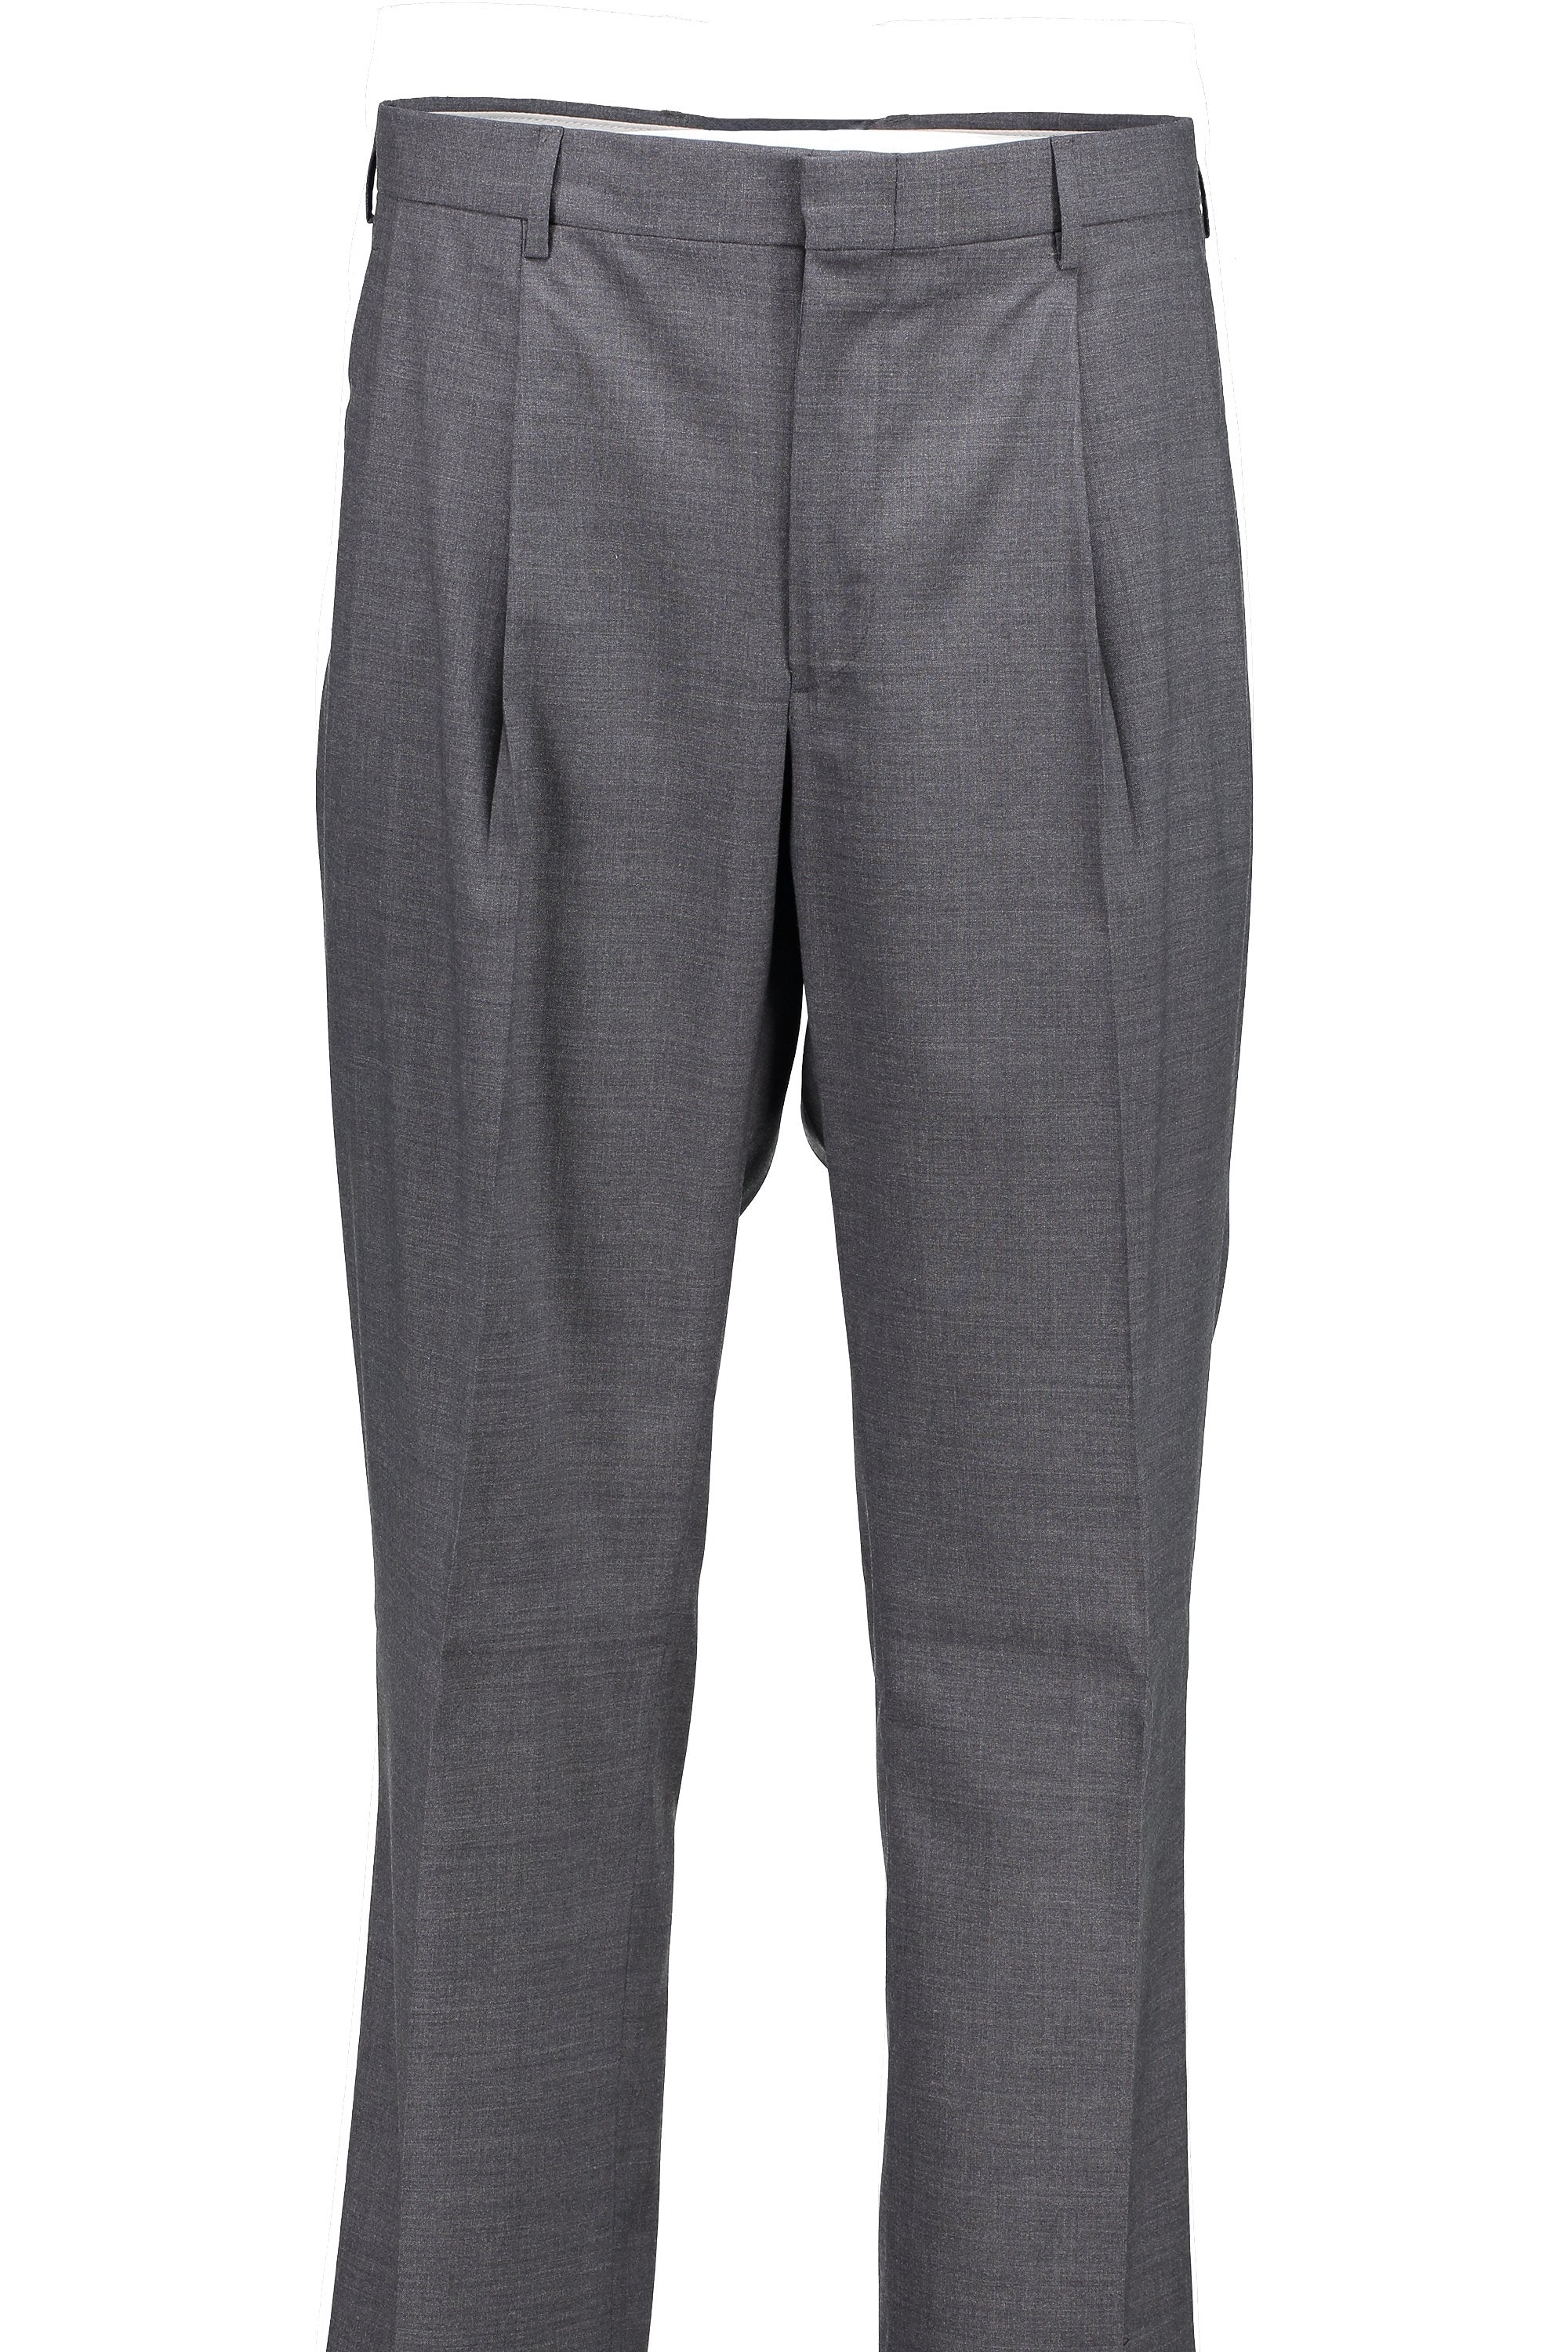 Men's Suit Separates Pleated Pant Classic Cut - MED GREY - 98/2